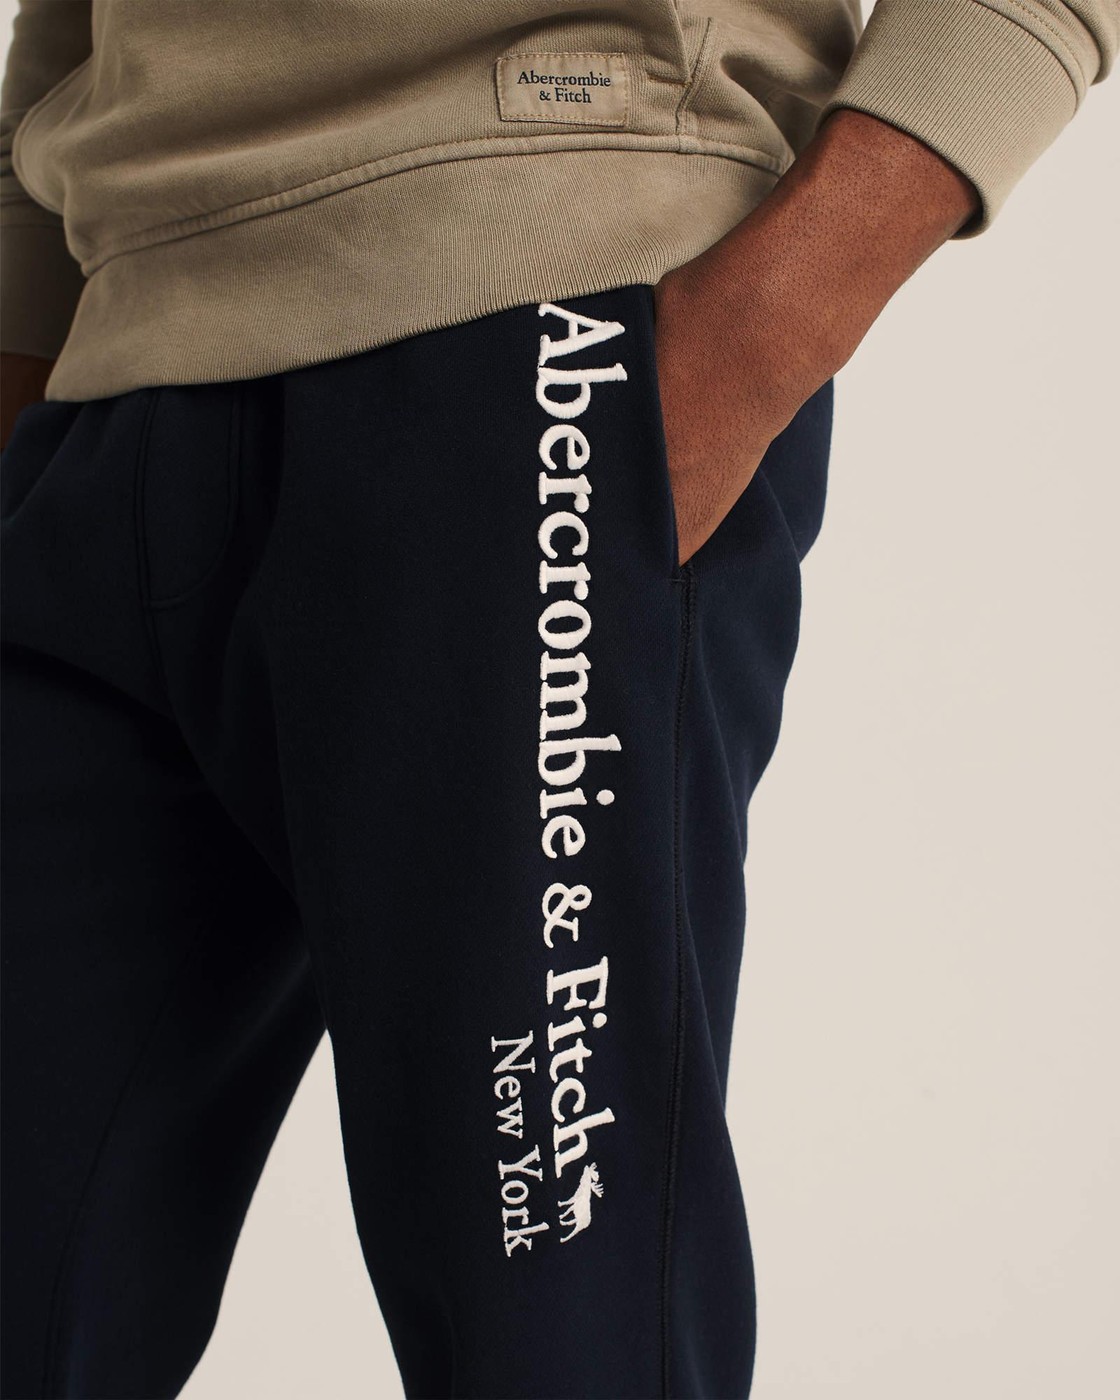 Спортивные штаны Abercrombie & Fitch, XL, XL